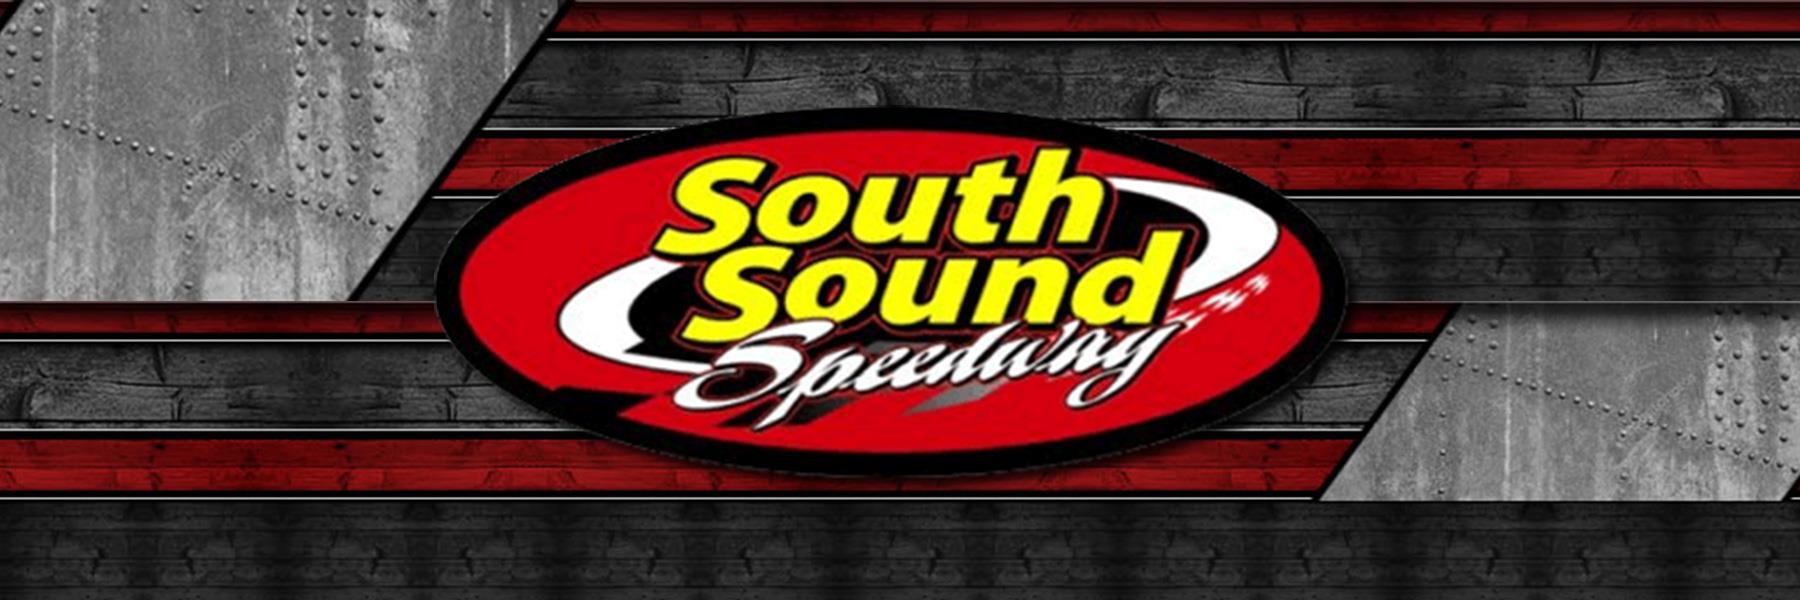 7/2/2022 - South Sound Speedway